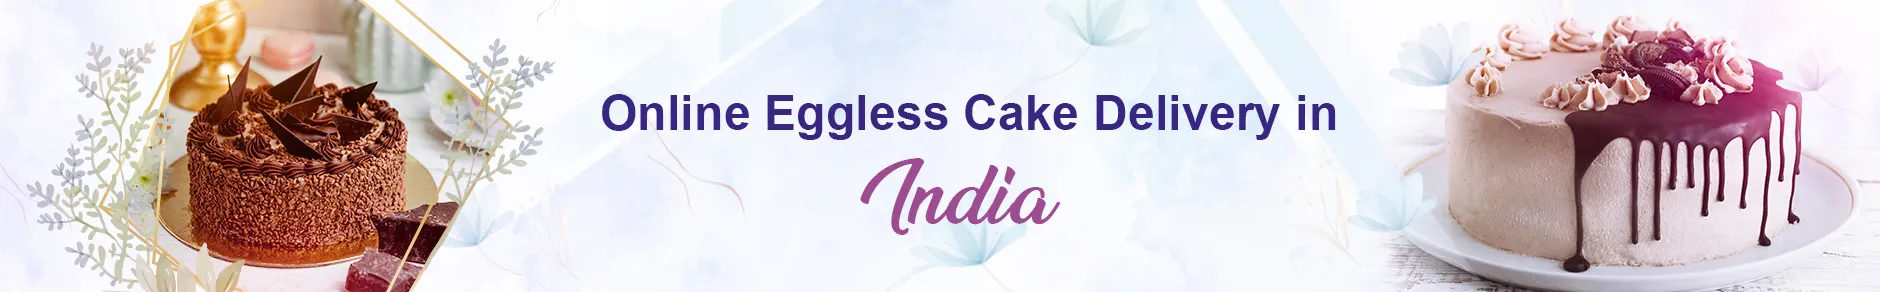 Eggless Cake India